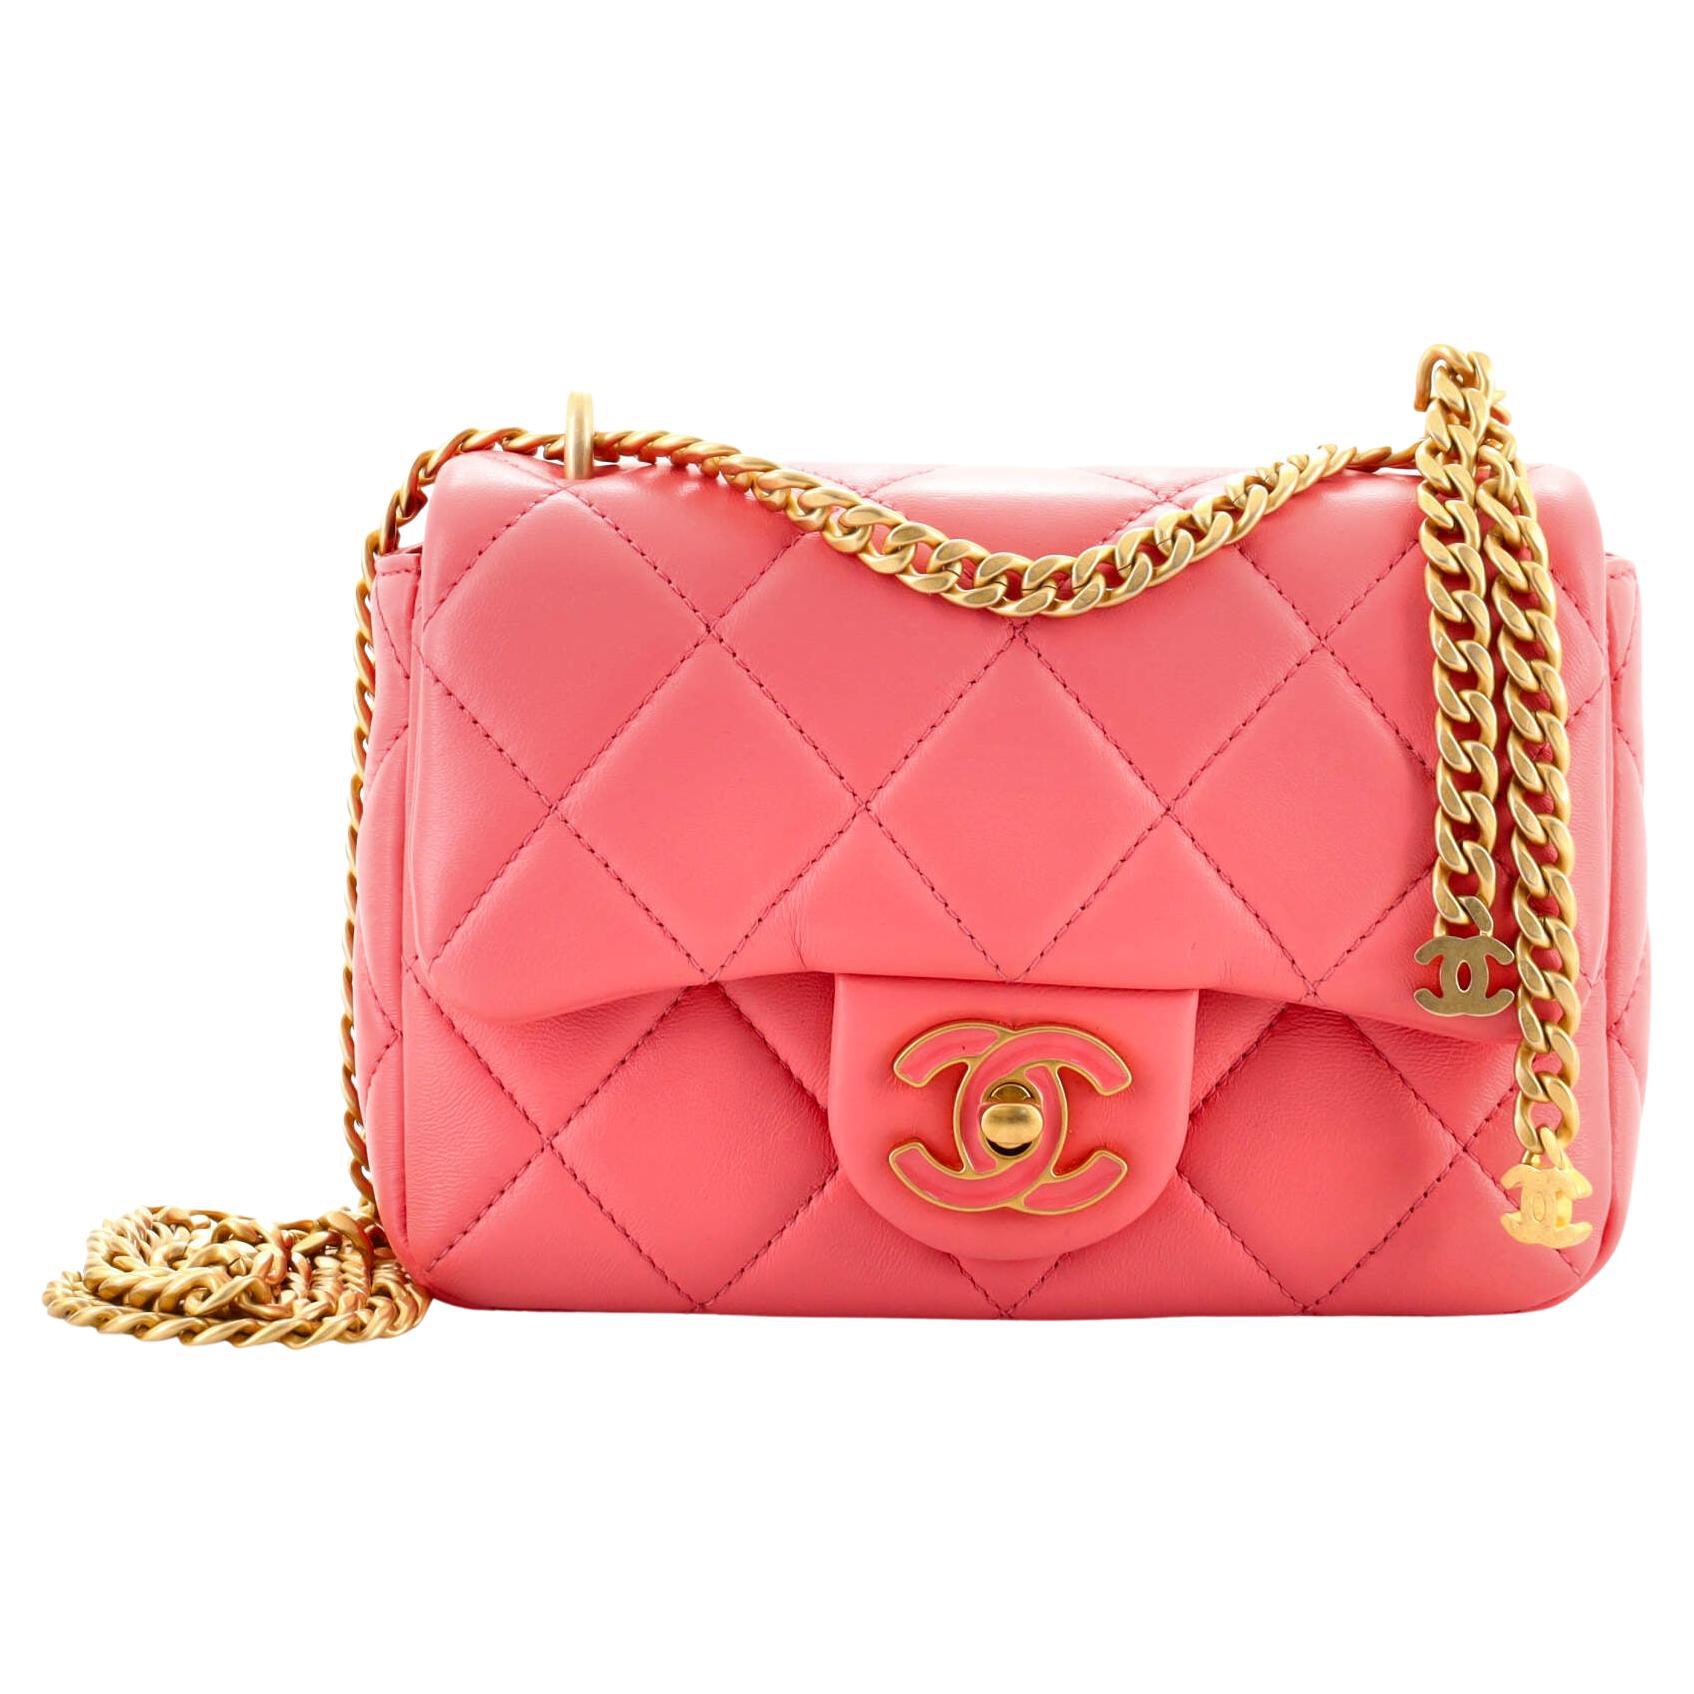 Chanel Handbags and their fashion icon designer Boca Raton